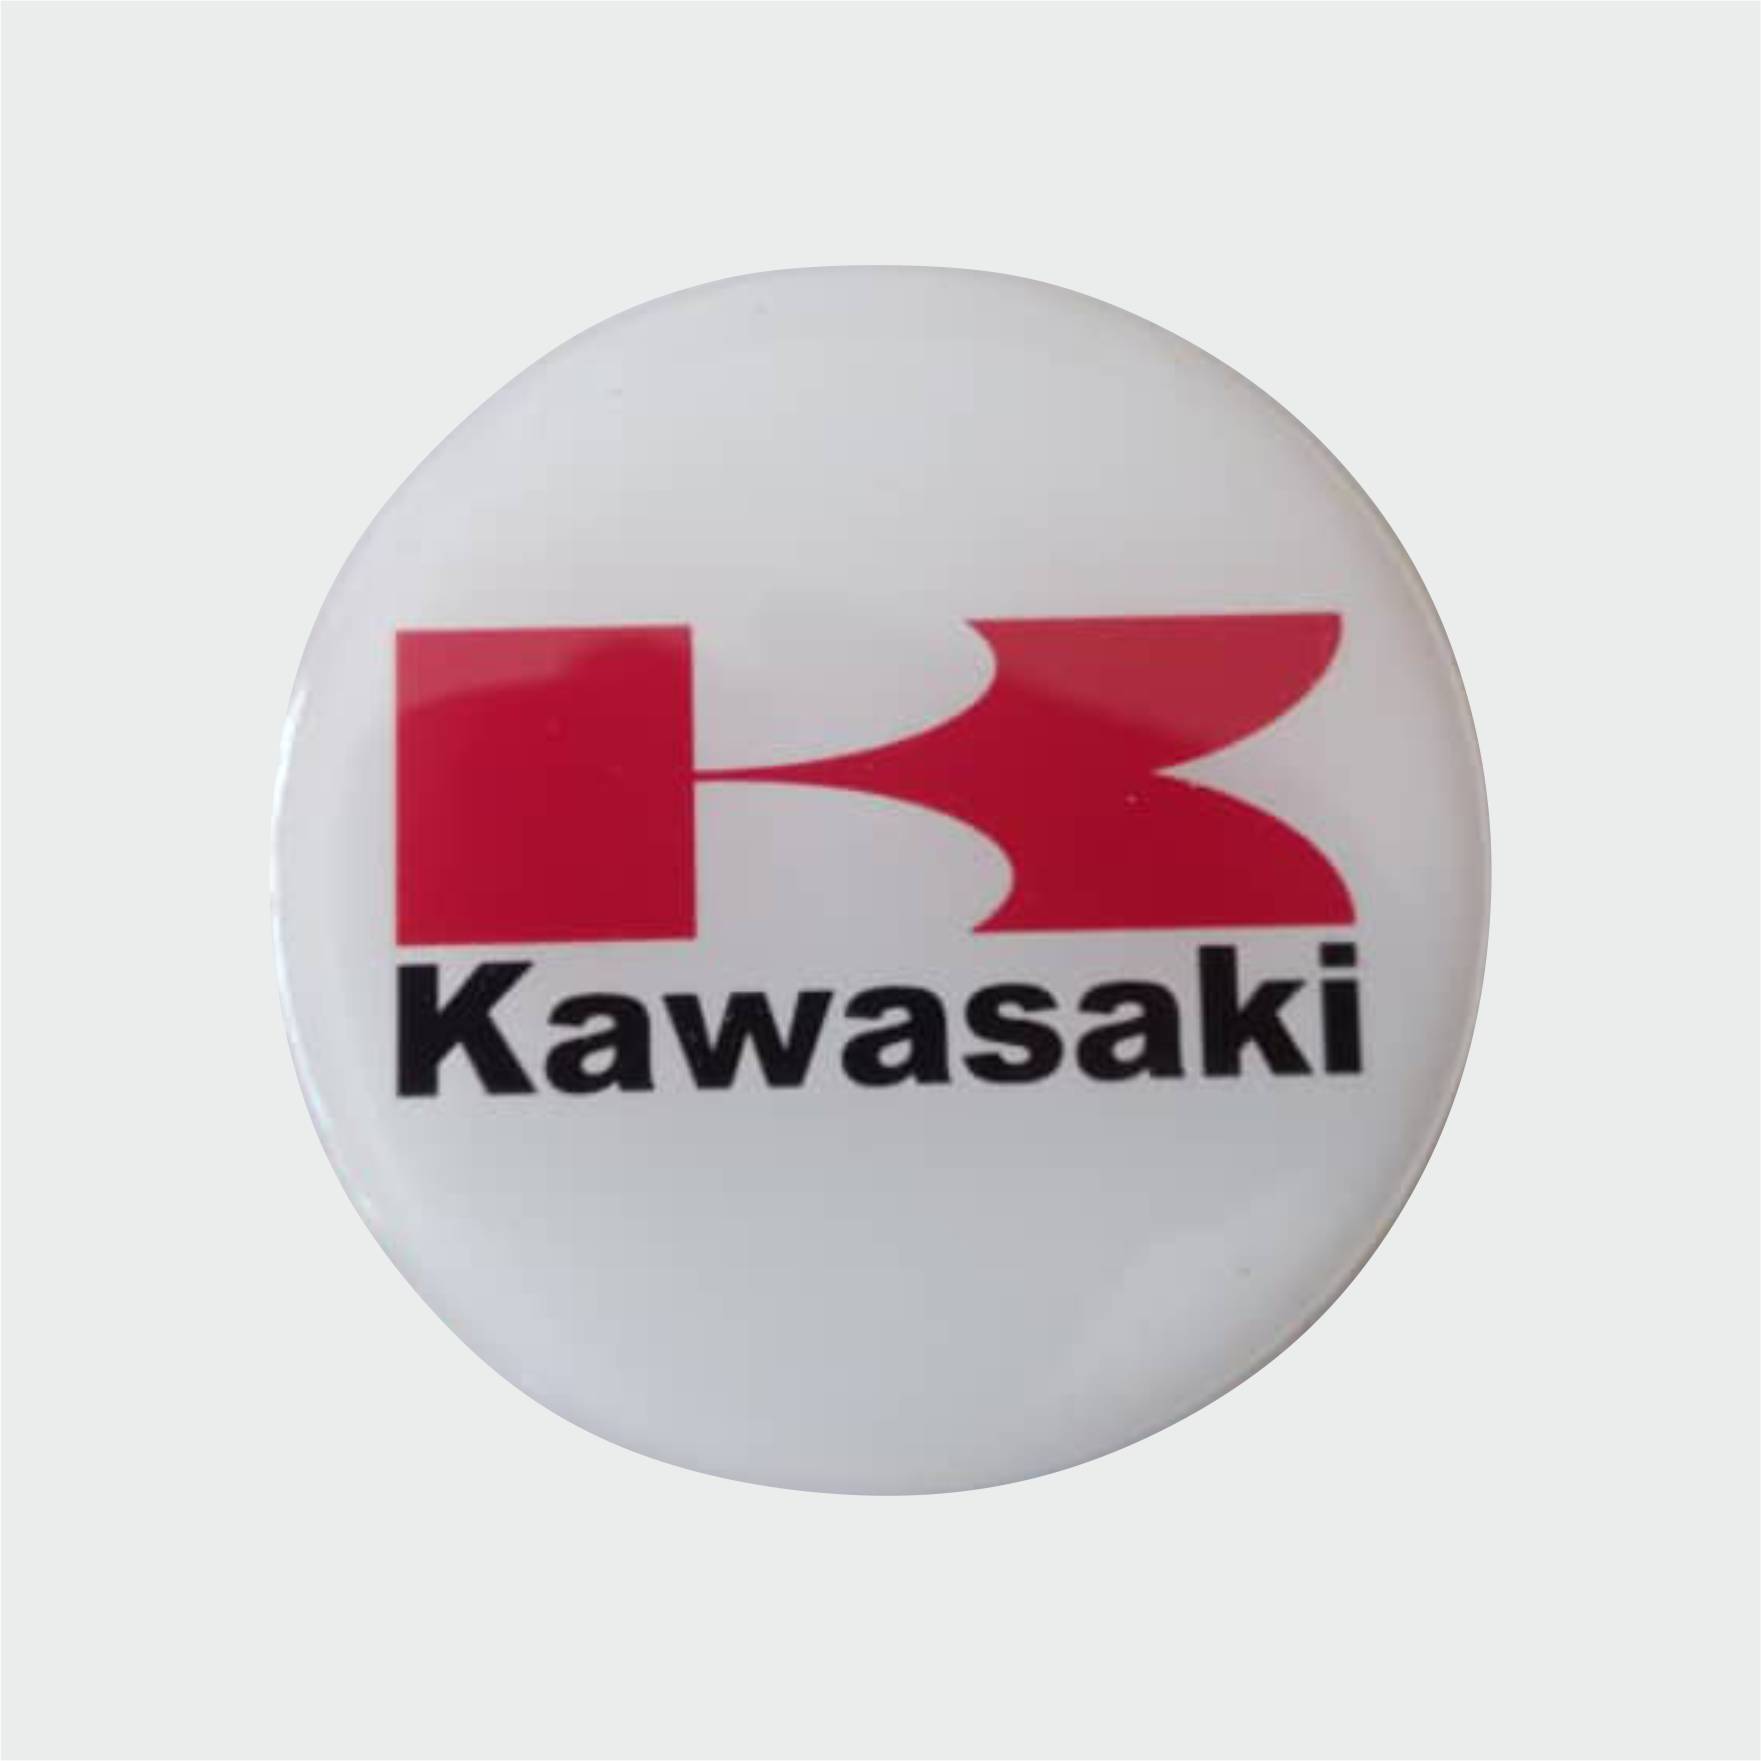 برچسب بدنه موتور طرح کاواساکی کد kawasaki1